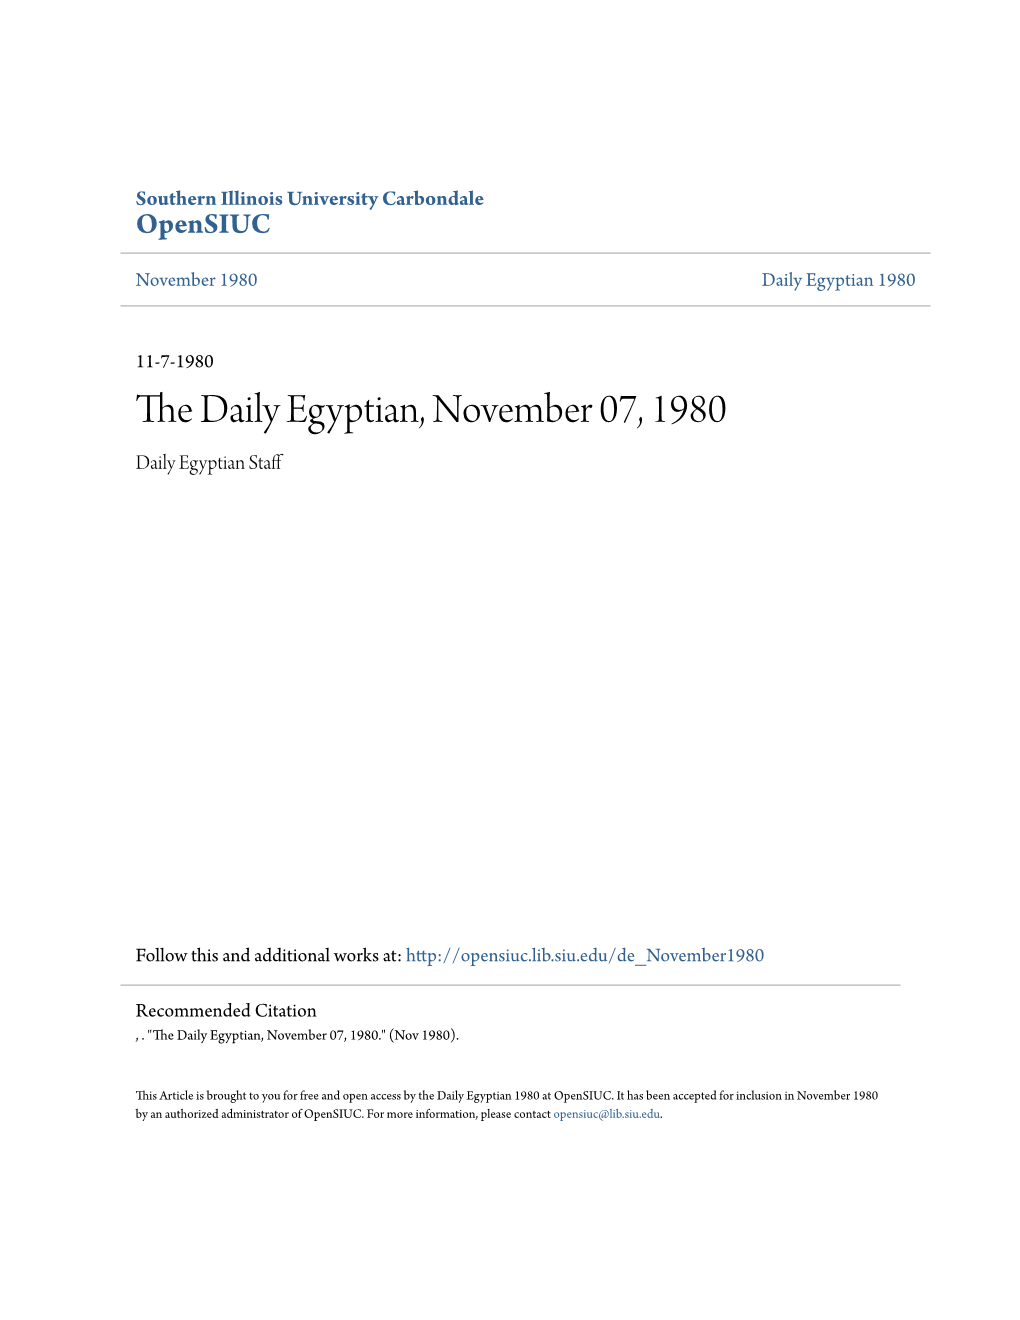 The Daily Egyptian, November 07, 1980